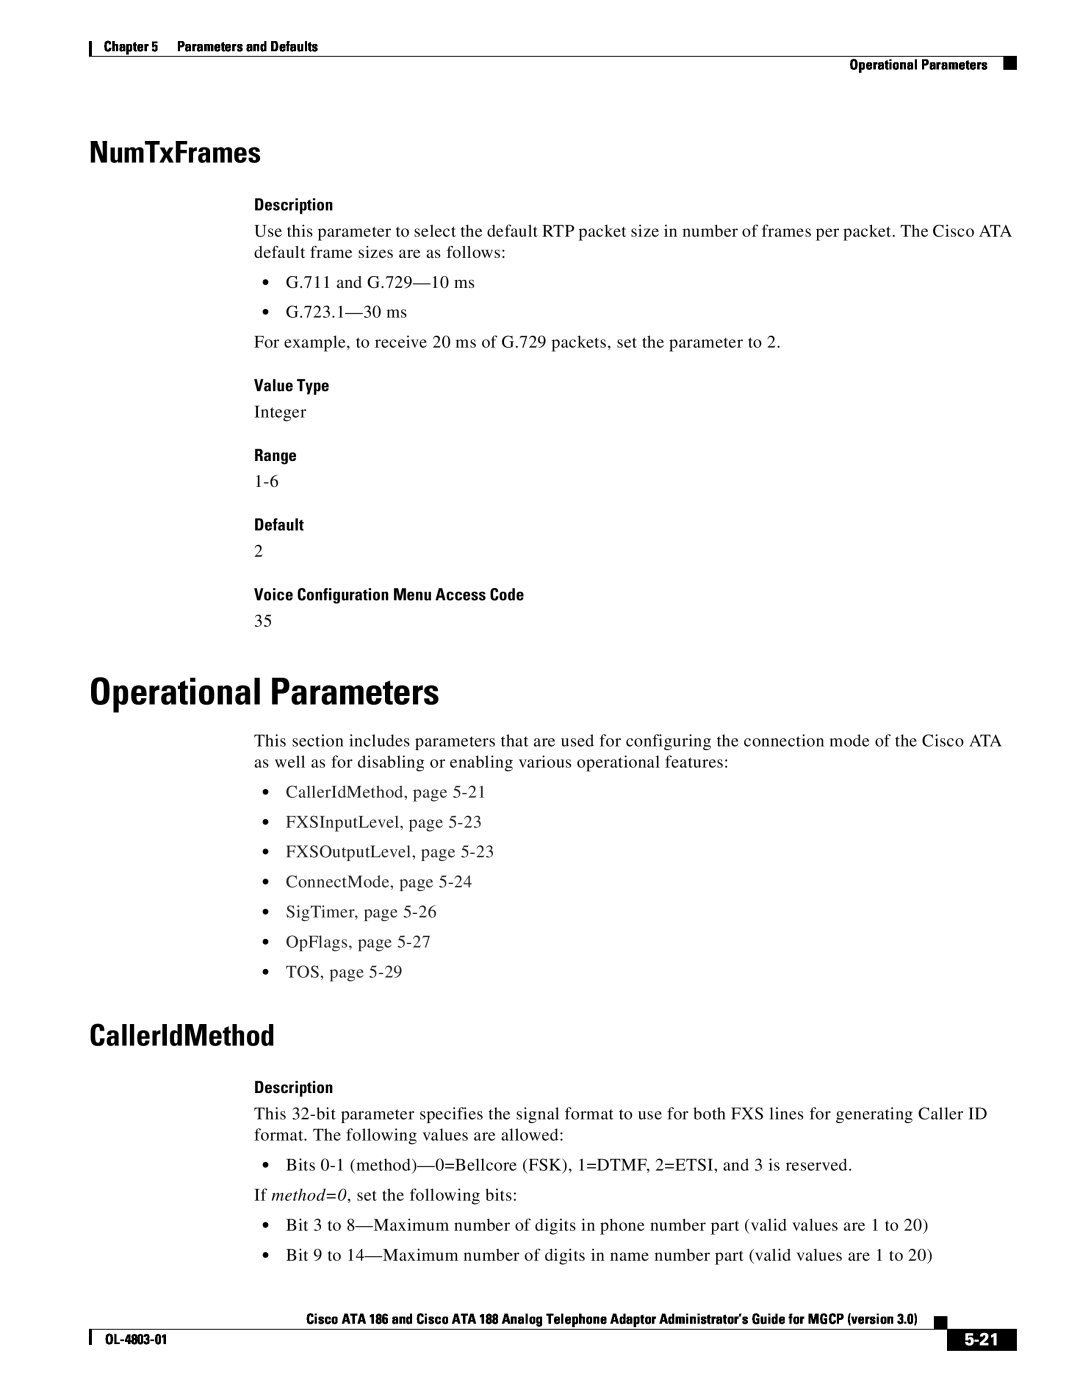 Cisco Systems ATA 188 Operational Parameters, NumTxFrames, CallerIdMethod, 5-21, Description, Value Type, Range, Default 